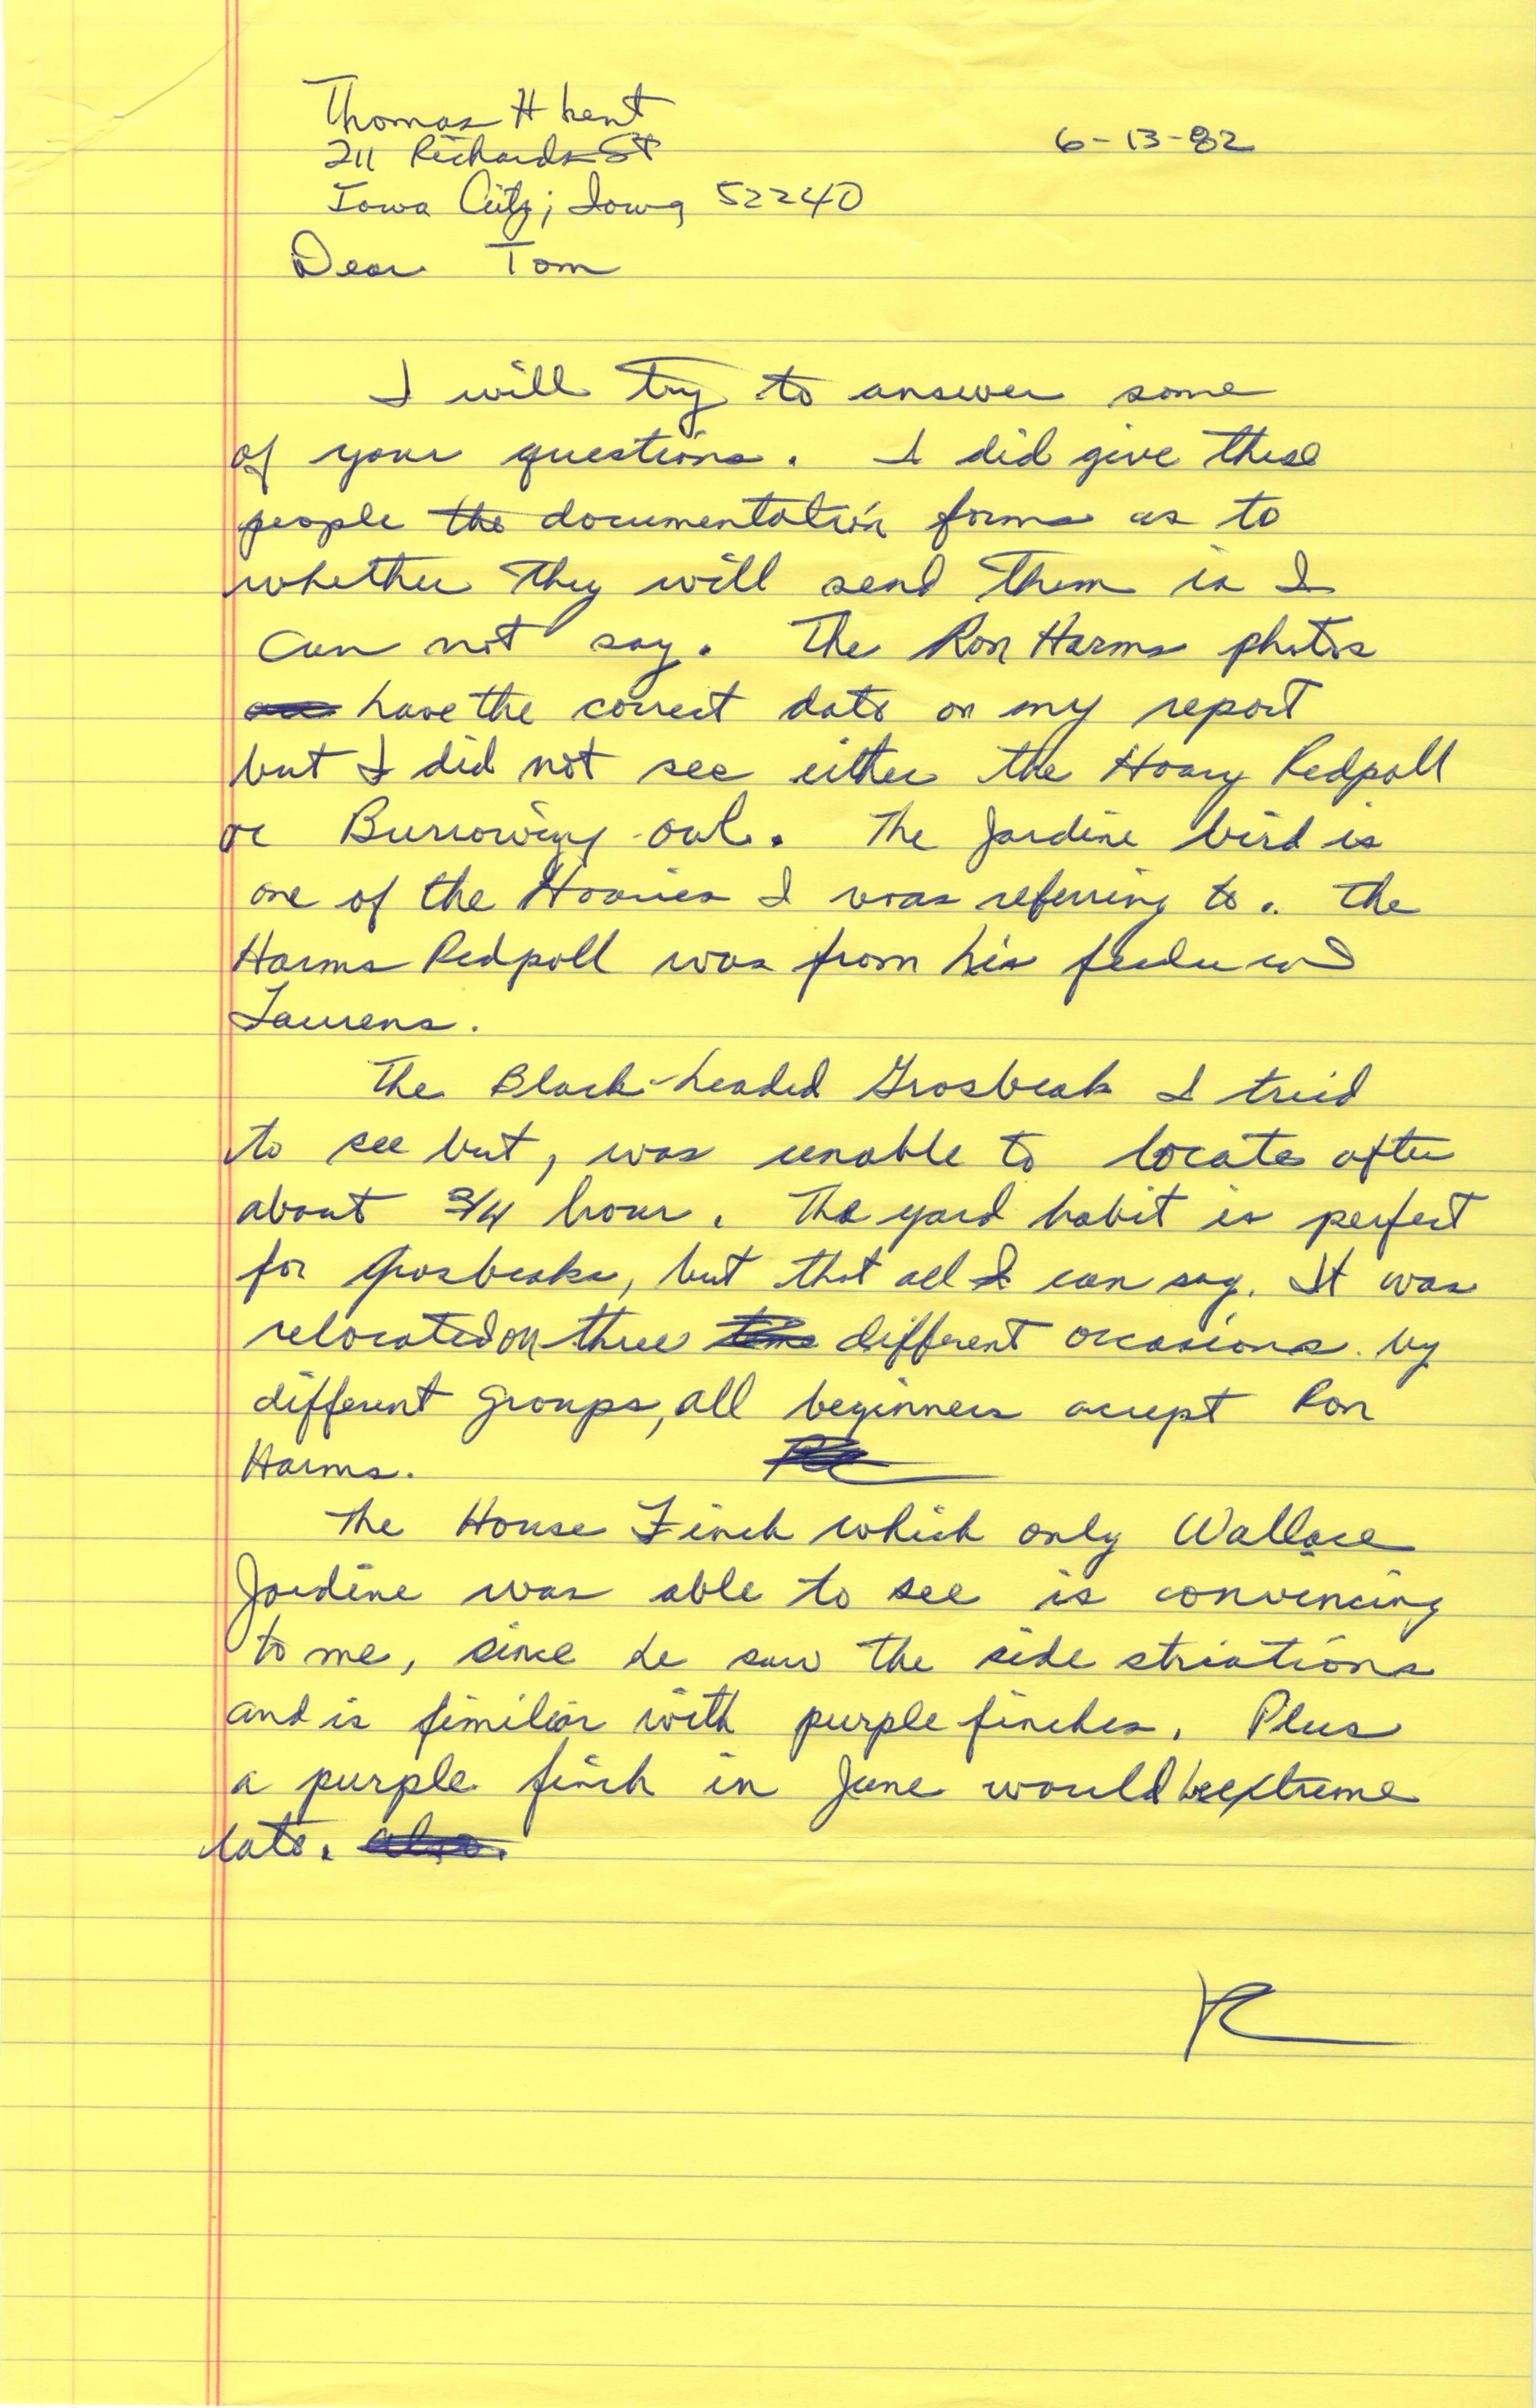 Ross Silcock letter to Thomas Kent regarding rare bird sightings in 1982, June 13, 1982